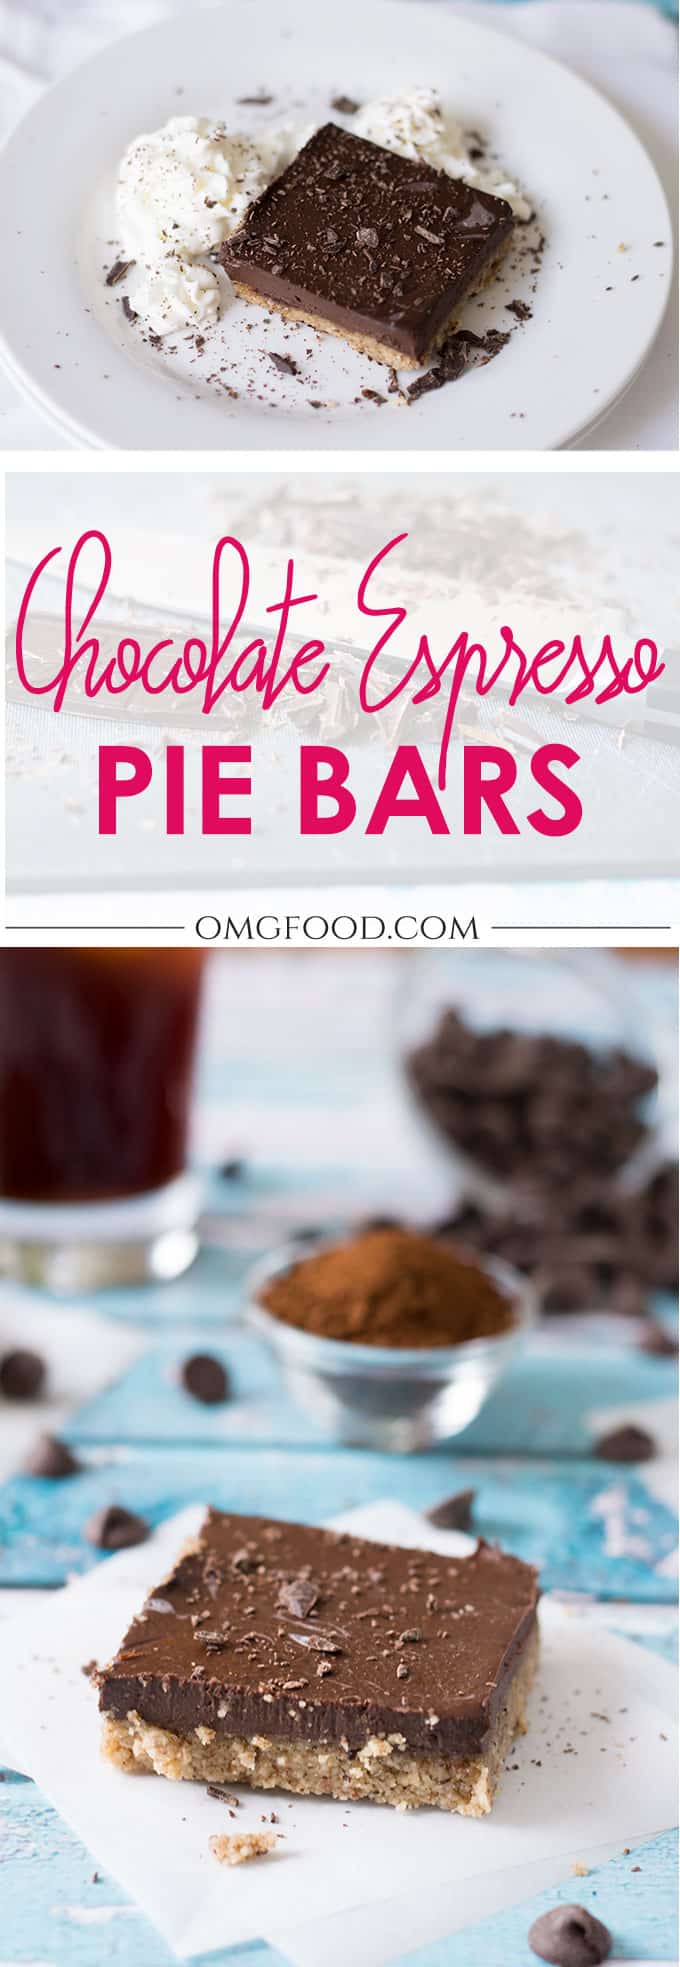 Pinterest banner for chocolate espresso pie bars.